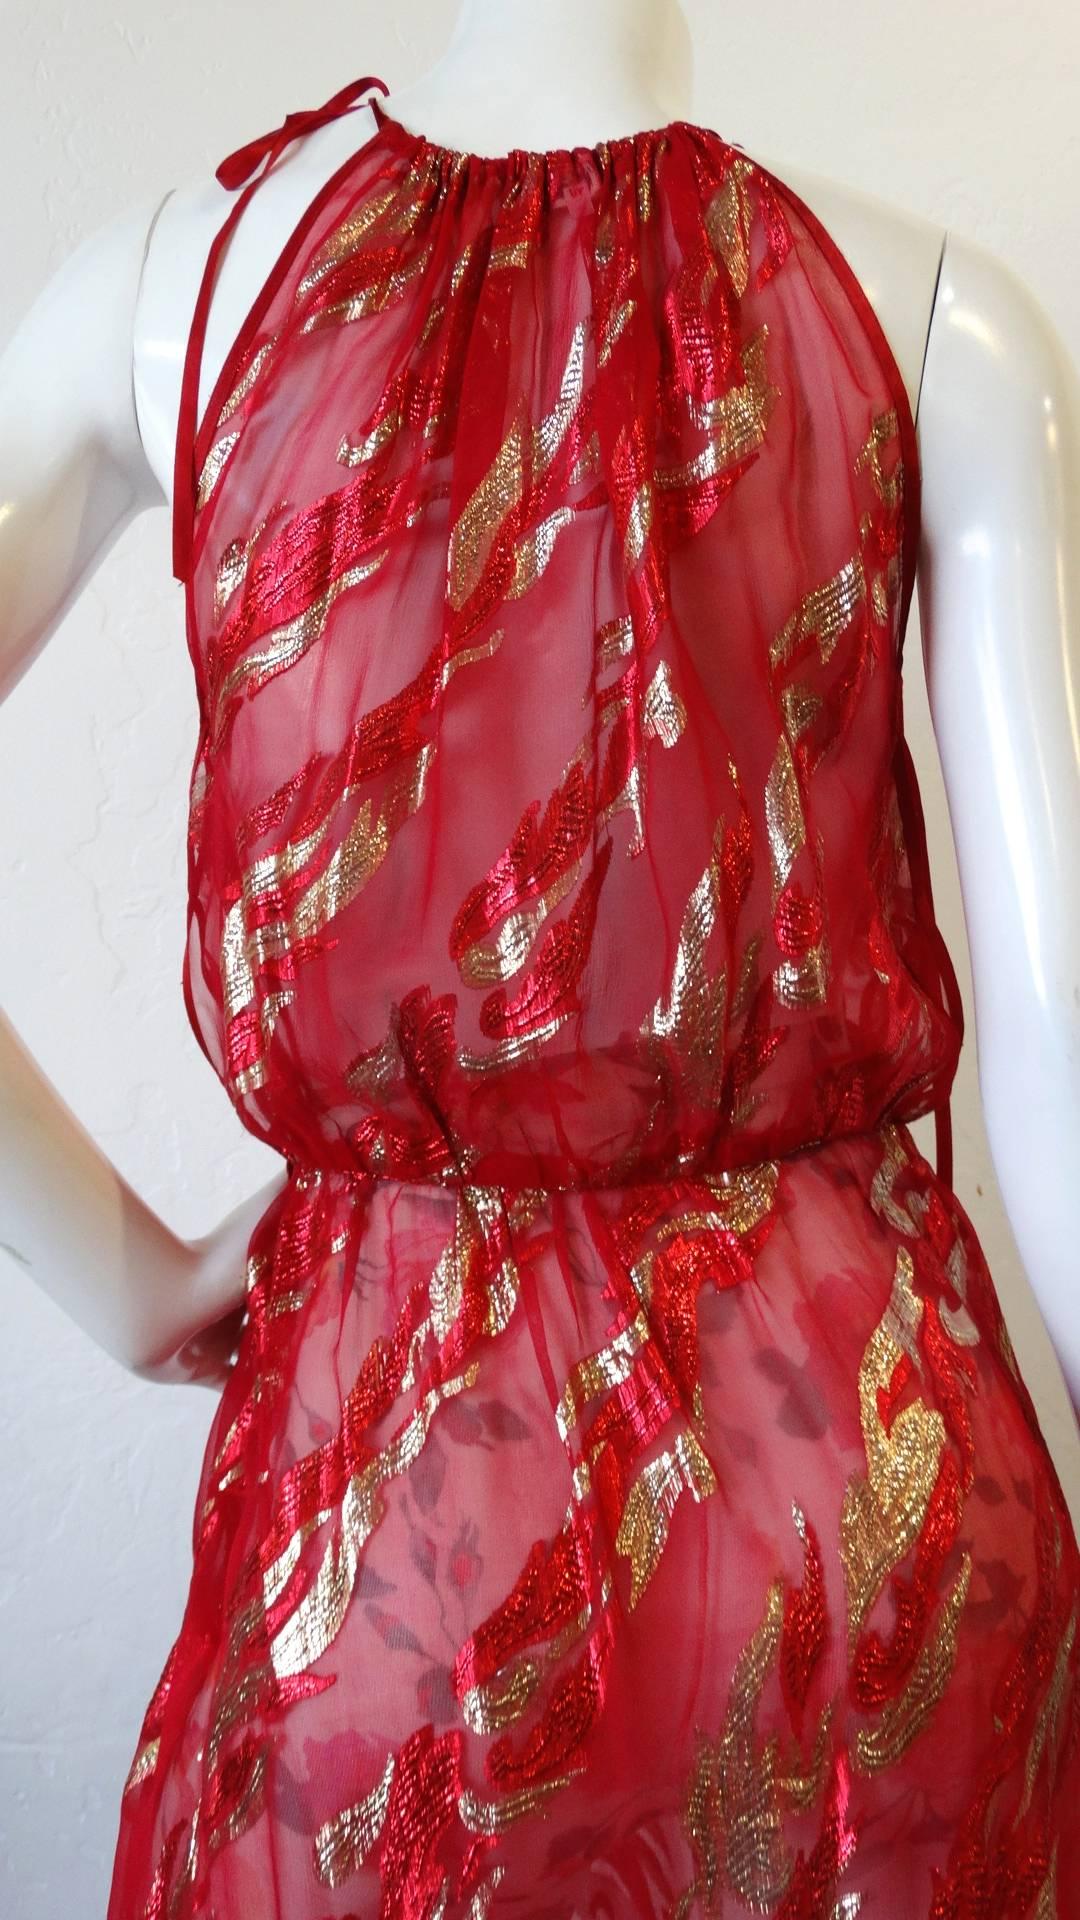 Saint Laurent Rive Gauche Red Sheer Printed Halter Dress, 1980s  6